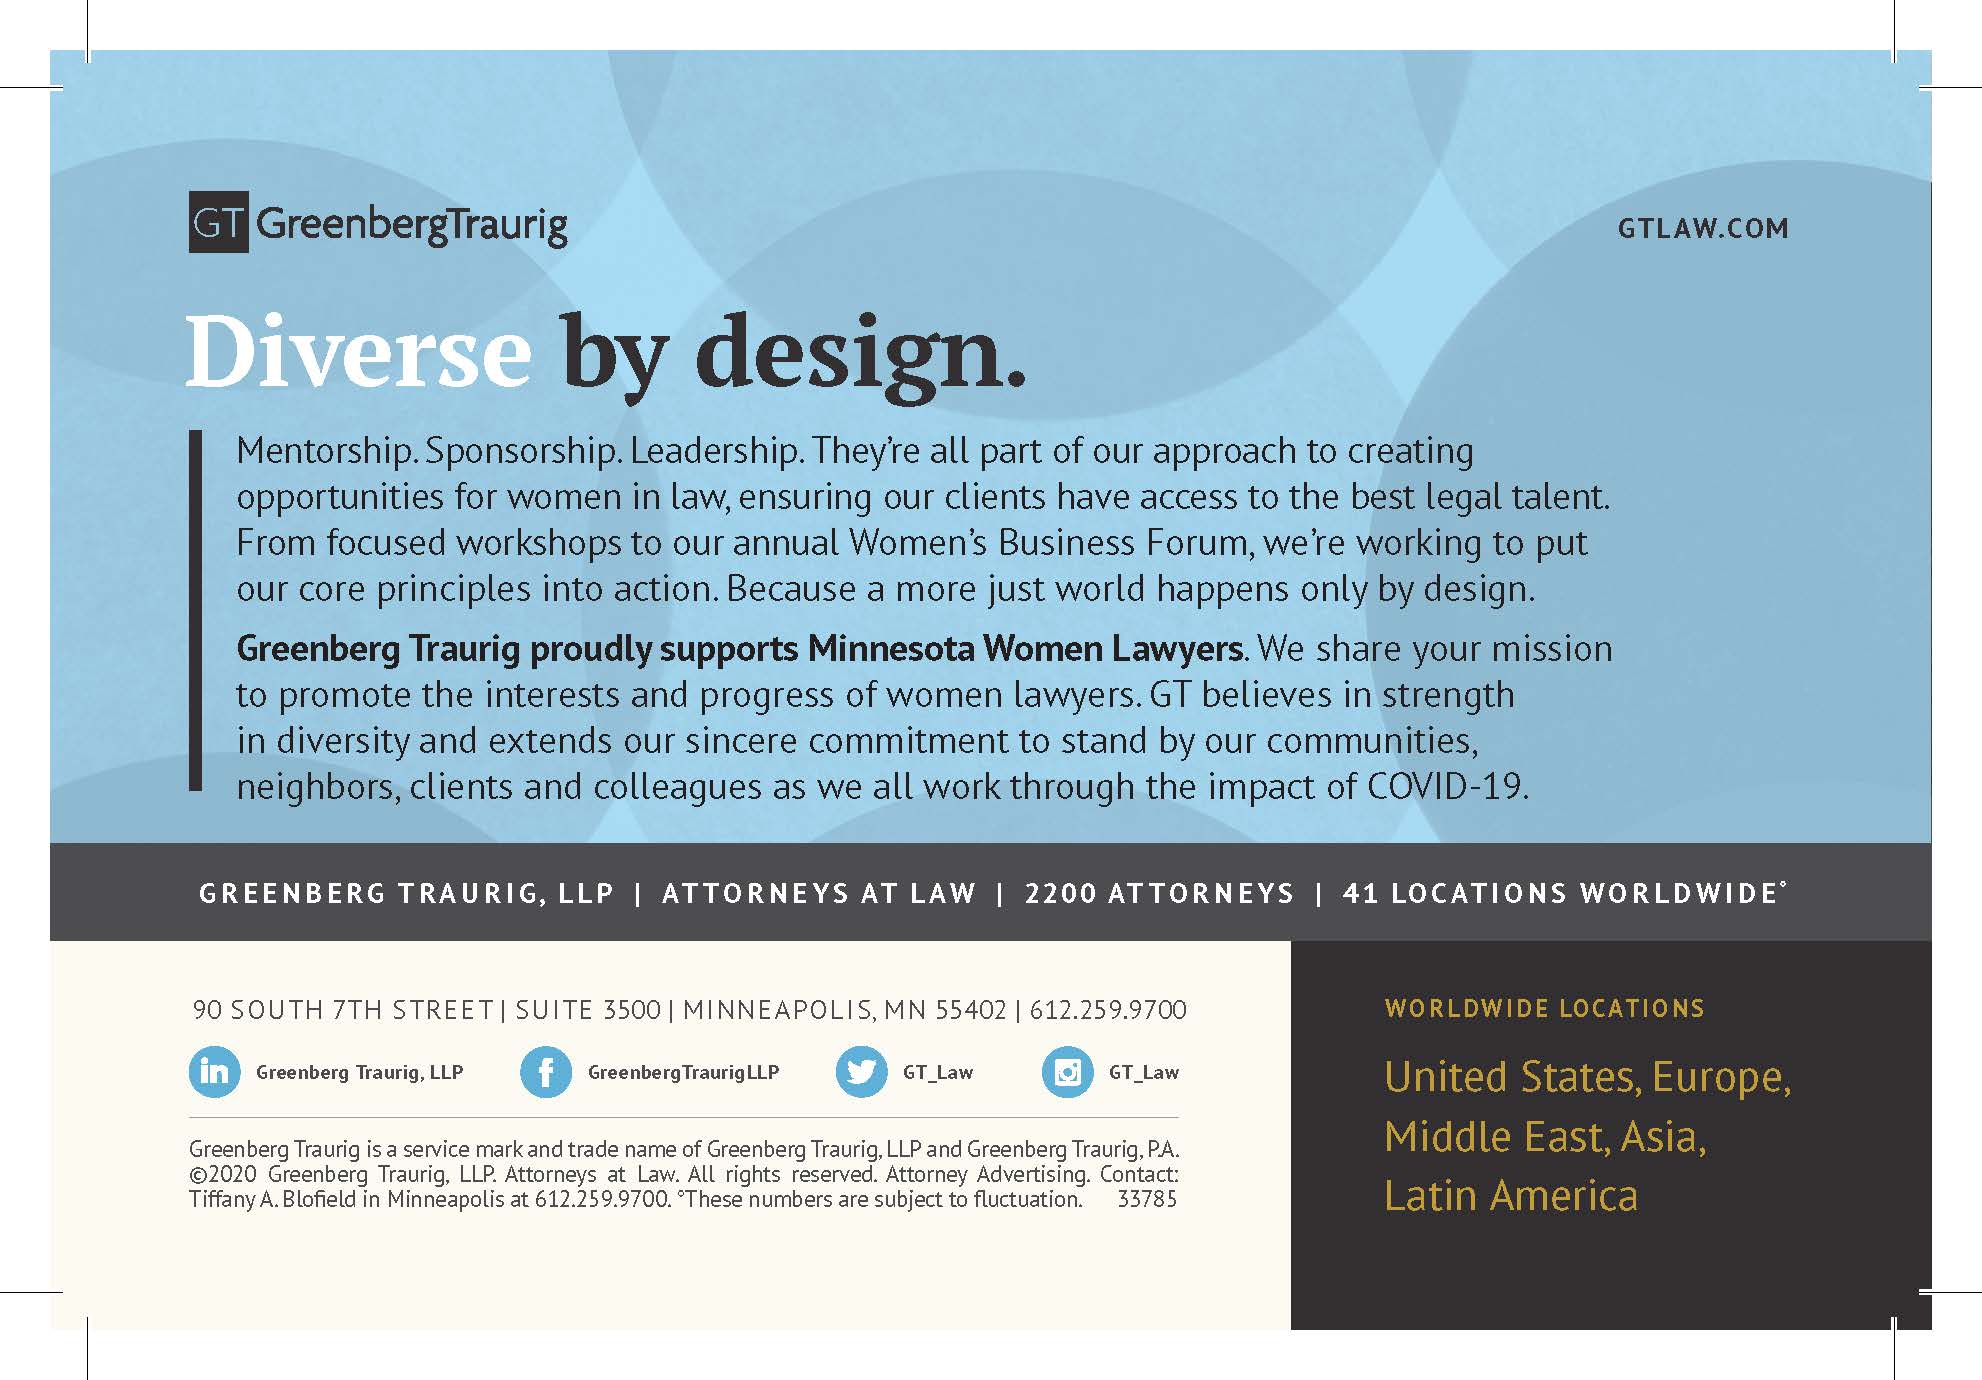 WER December 11 Feature 11 - Minnesota Women Lawyers